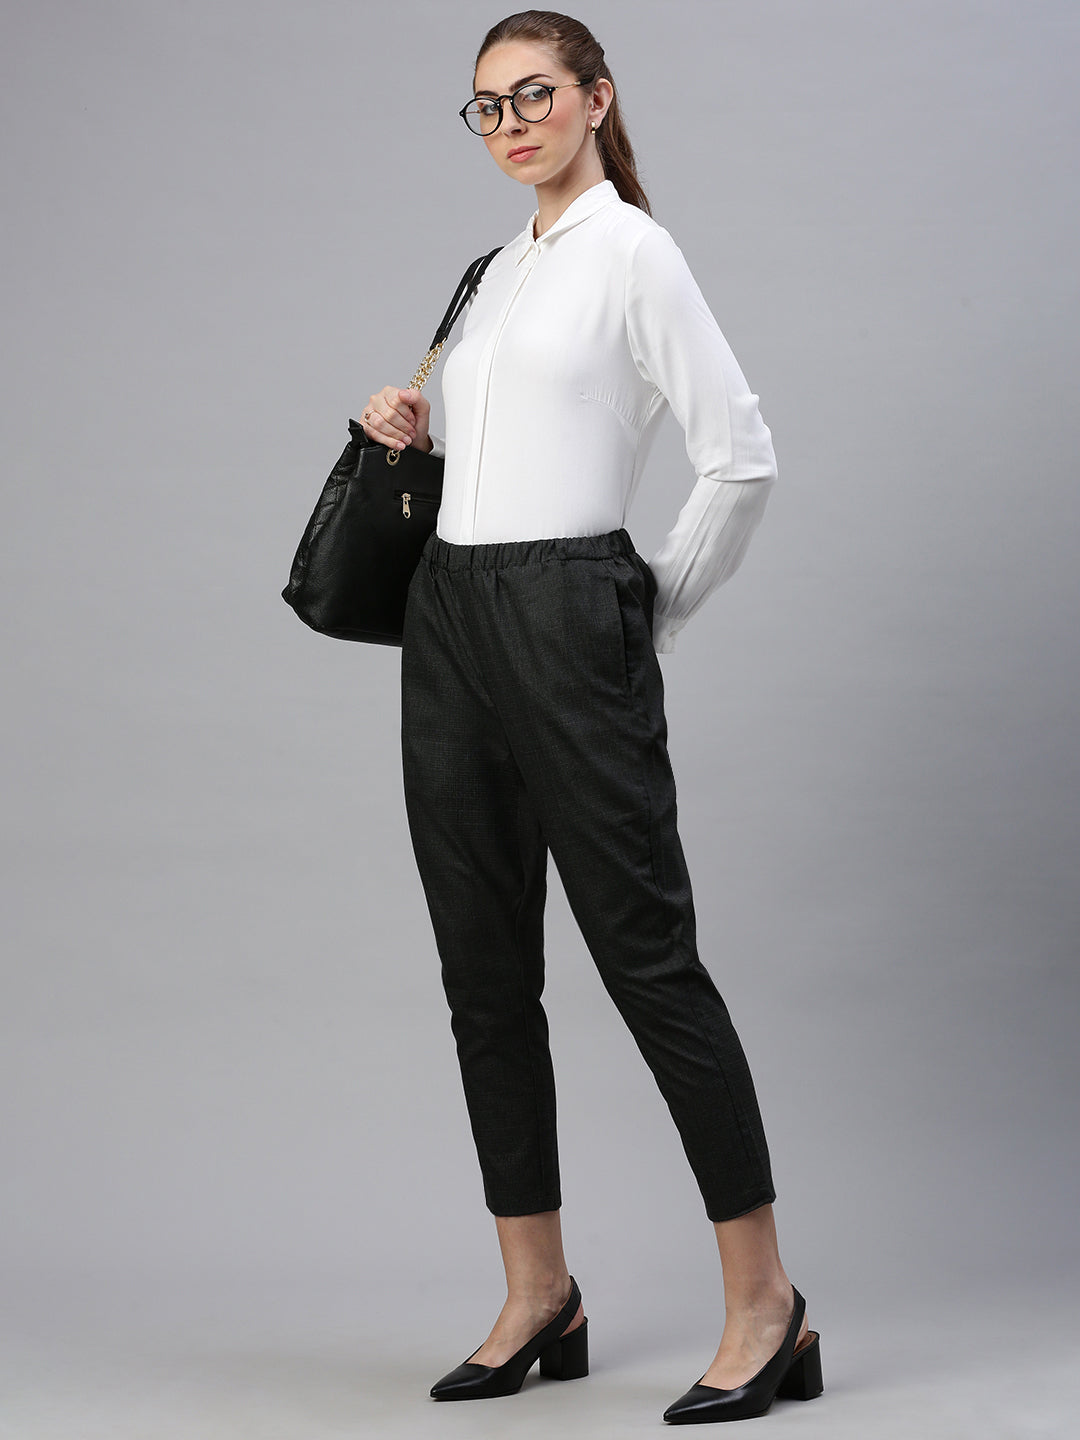 Black High Waist Straight Pants | Formal pants women, Formal trousers women,  Pants women fashion